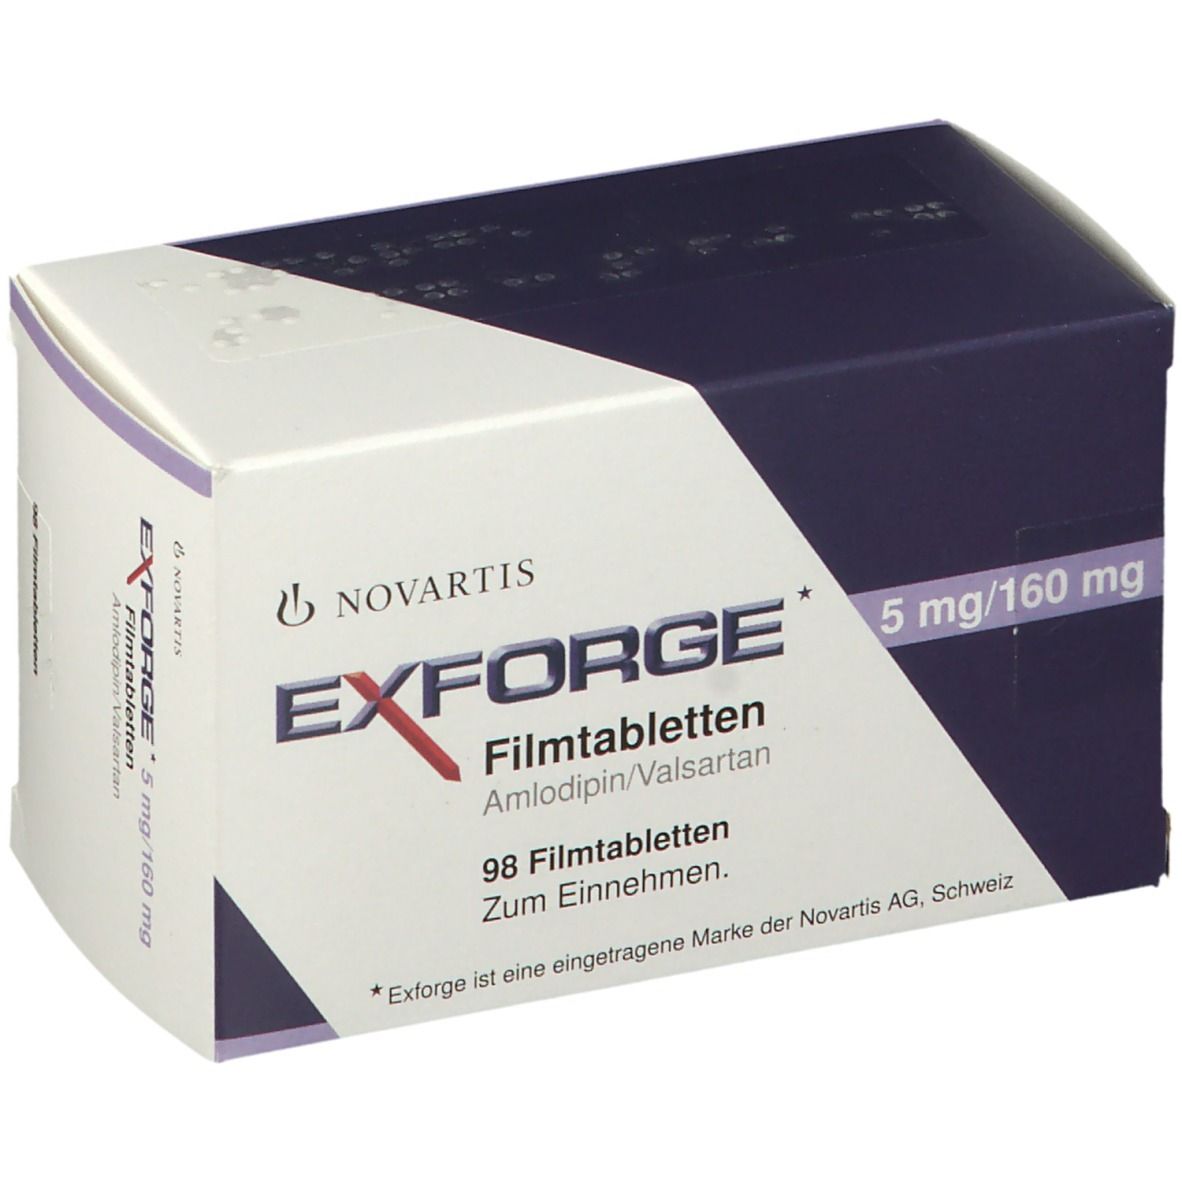 Exforge 5 mg/160 mg